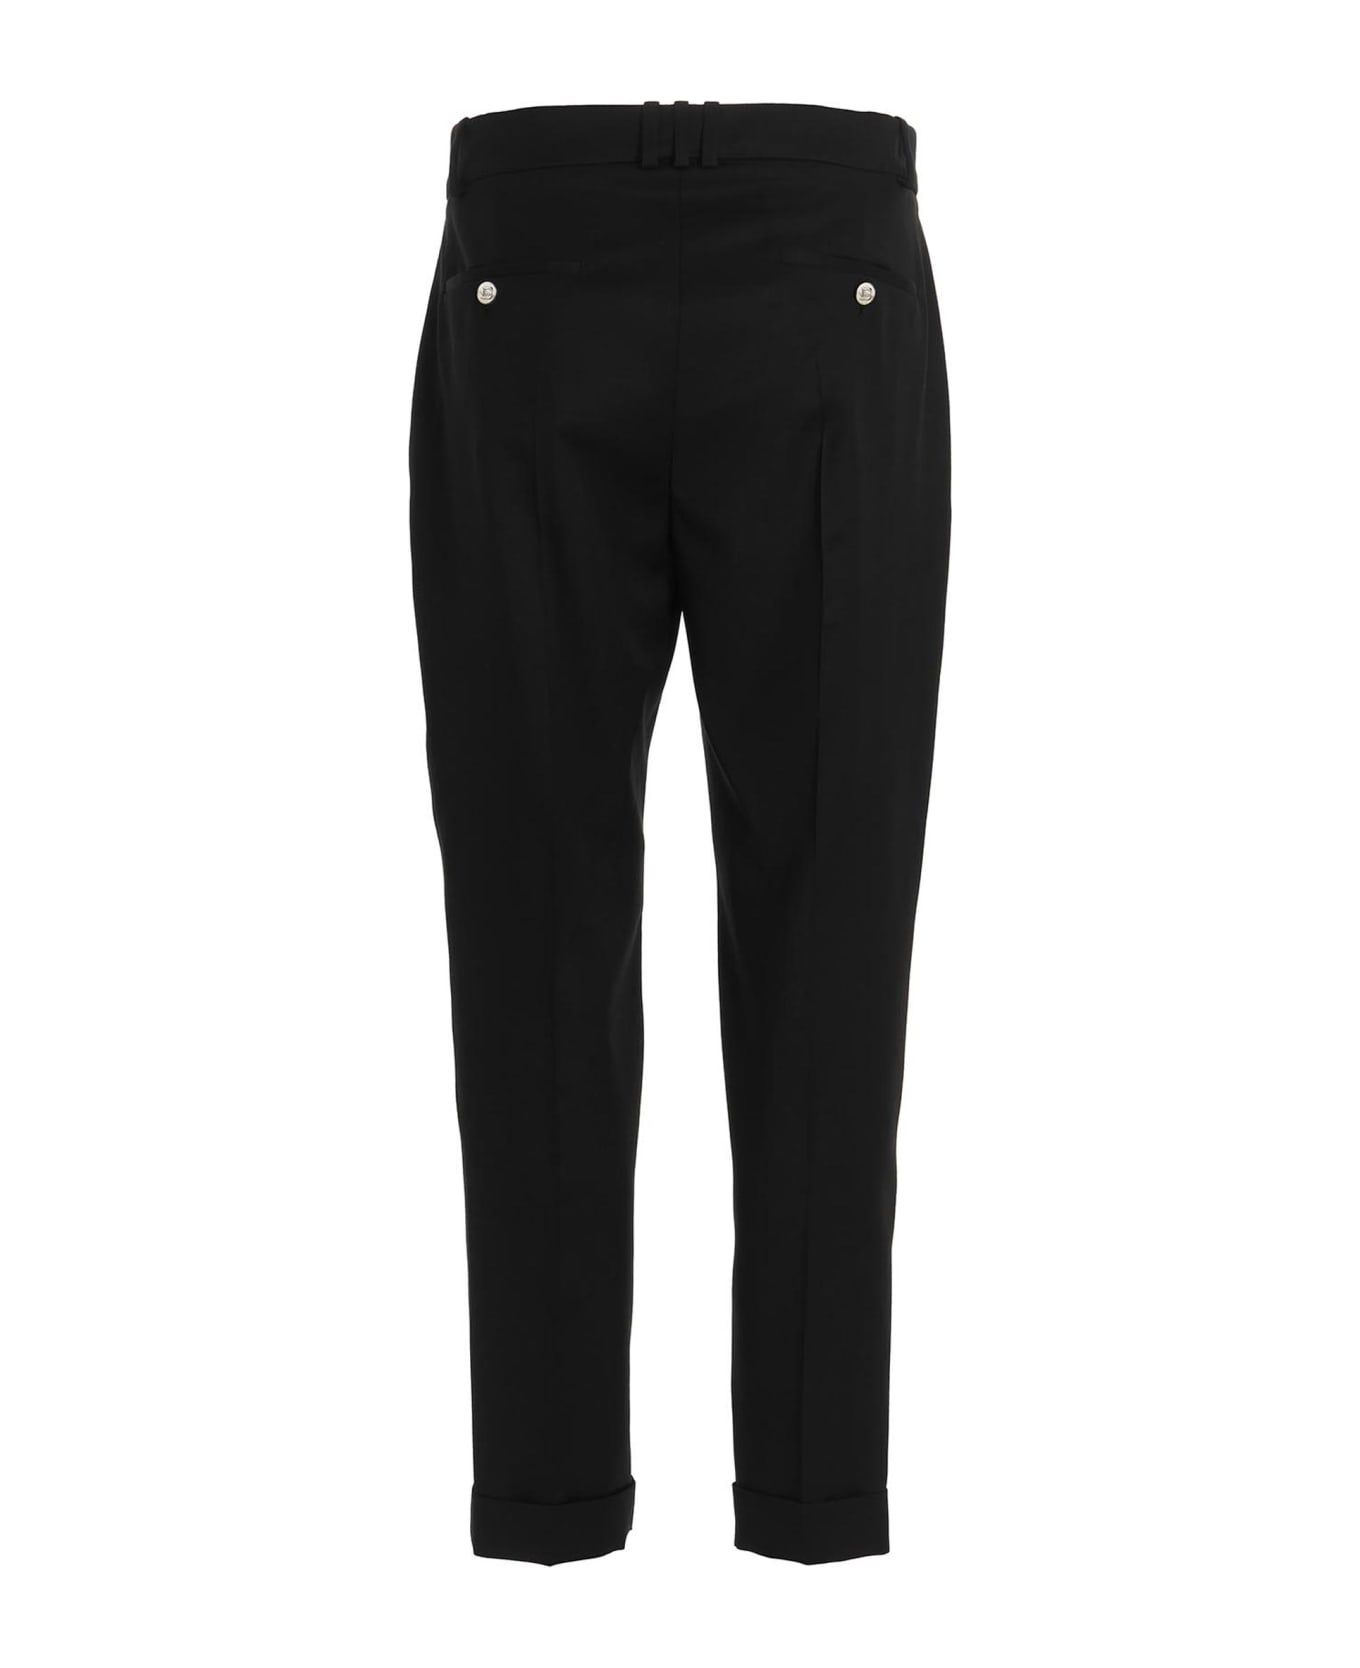 Balmain Pants In Black Wool - Black